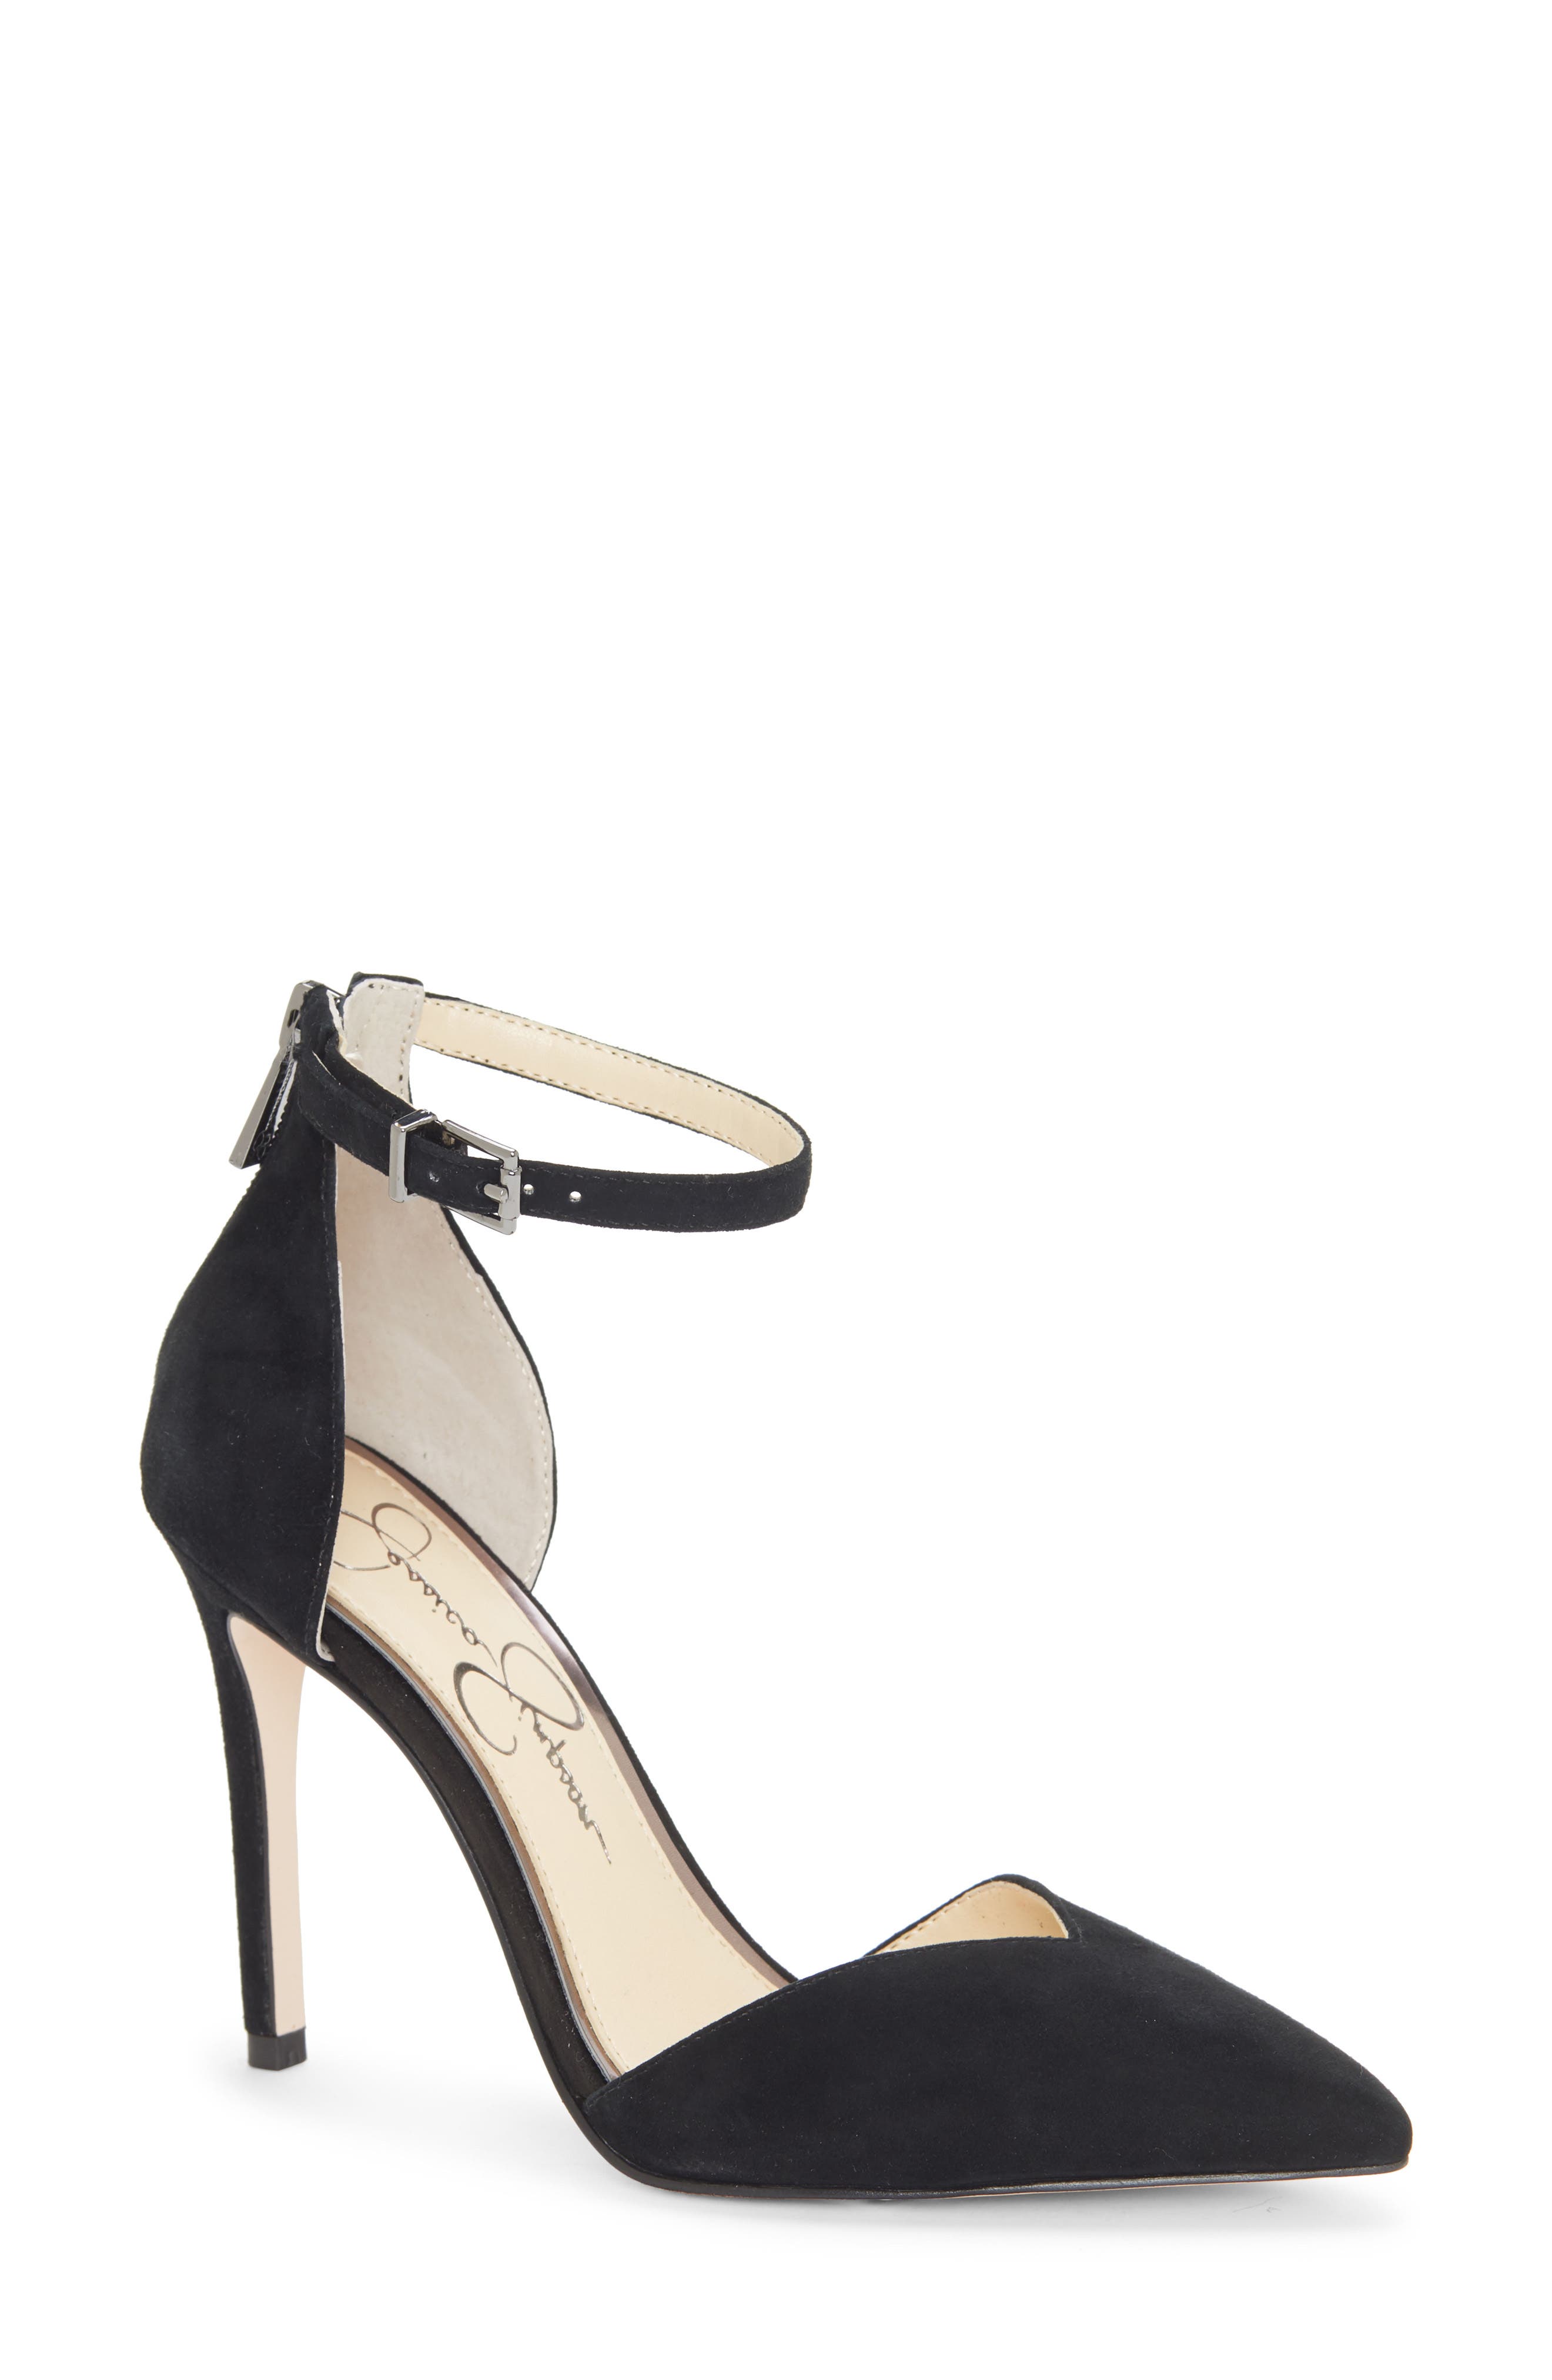 jessica simpson black ankle strap heels